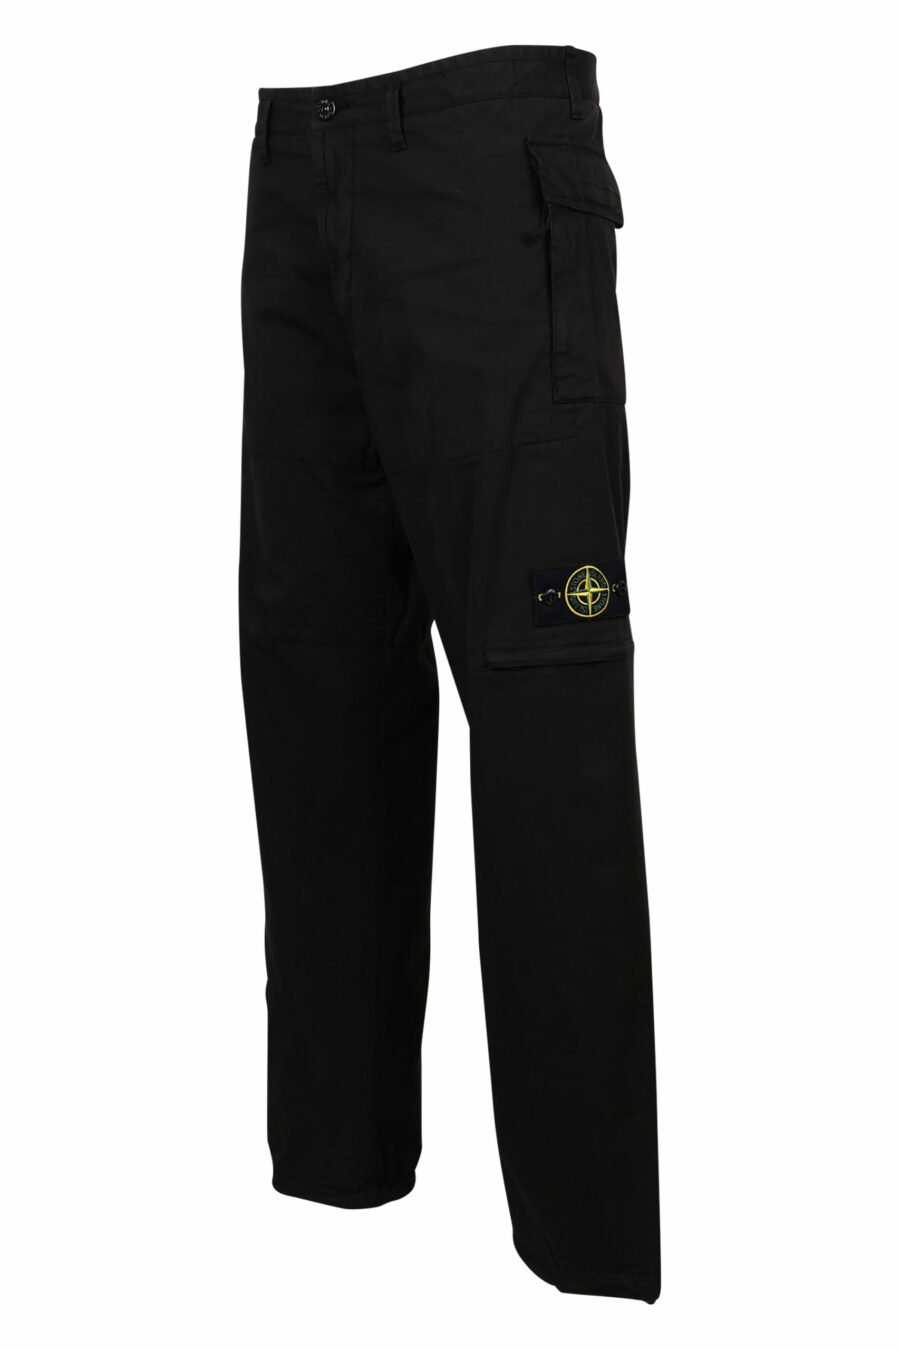 Pantalón cargo negro con bolsillos y logo parche - 8052572731846 1 scaled